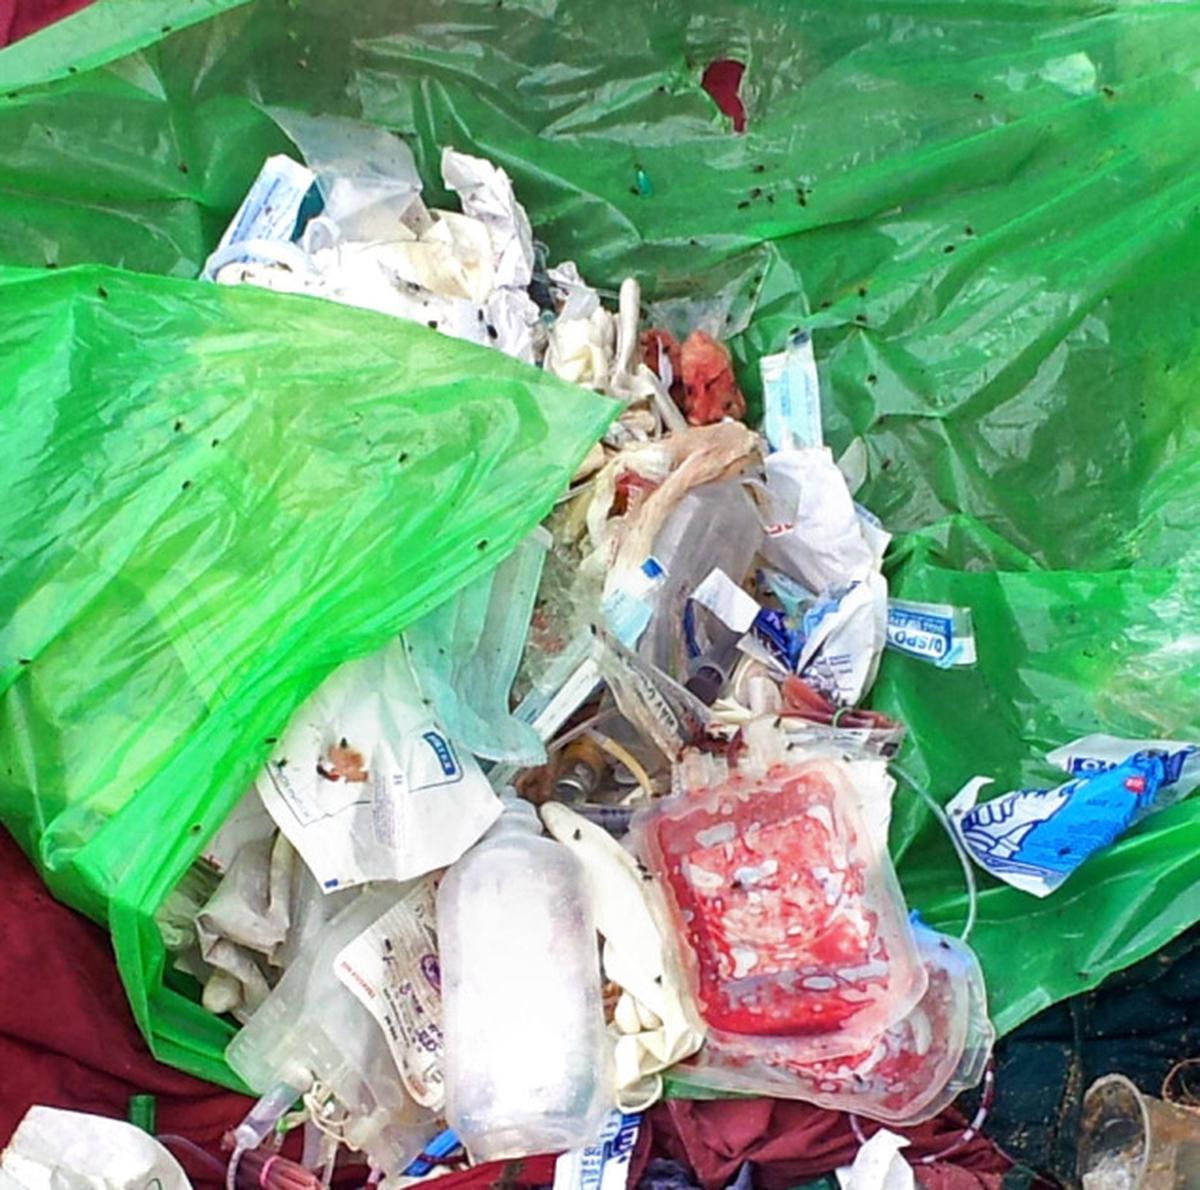 Bid to dump biomedical waste: Corpn. issues notice to hospital - The Hindu